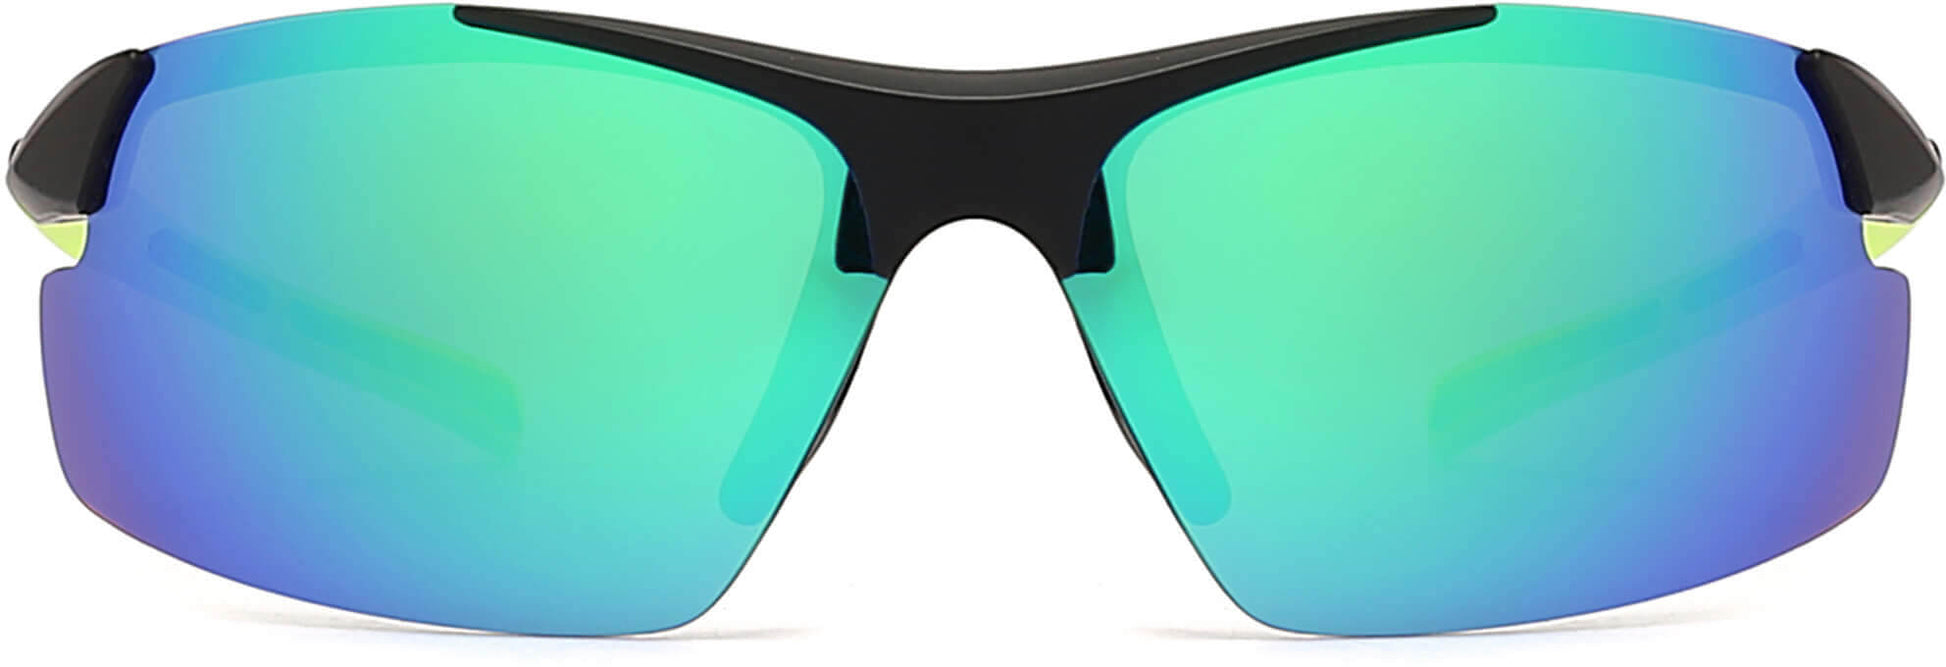 Jeshun Green Plastic Sunglasses from ANRRI